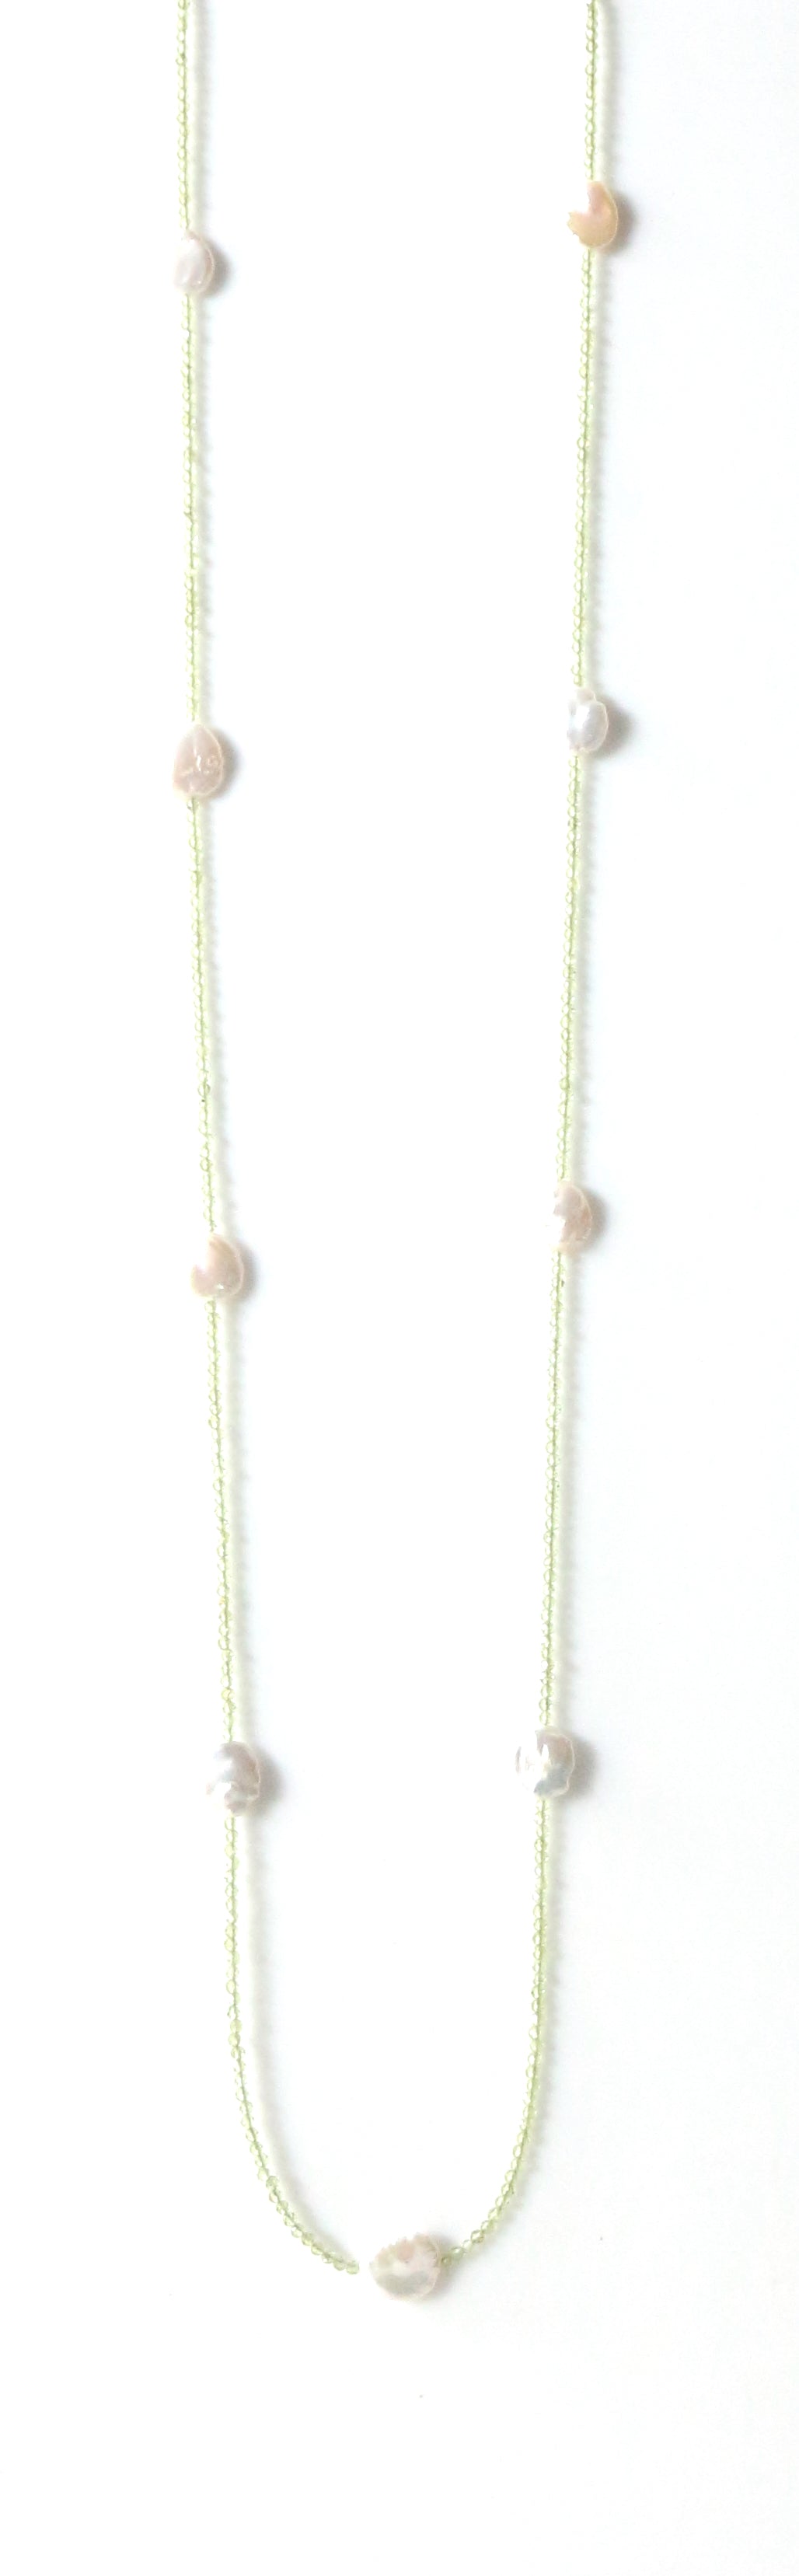 Australian Handmade Green Necklace with Peridot and Keshi Pearls